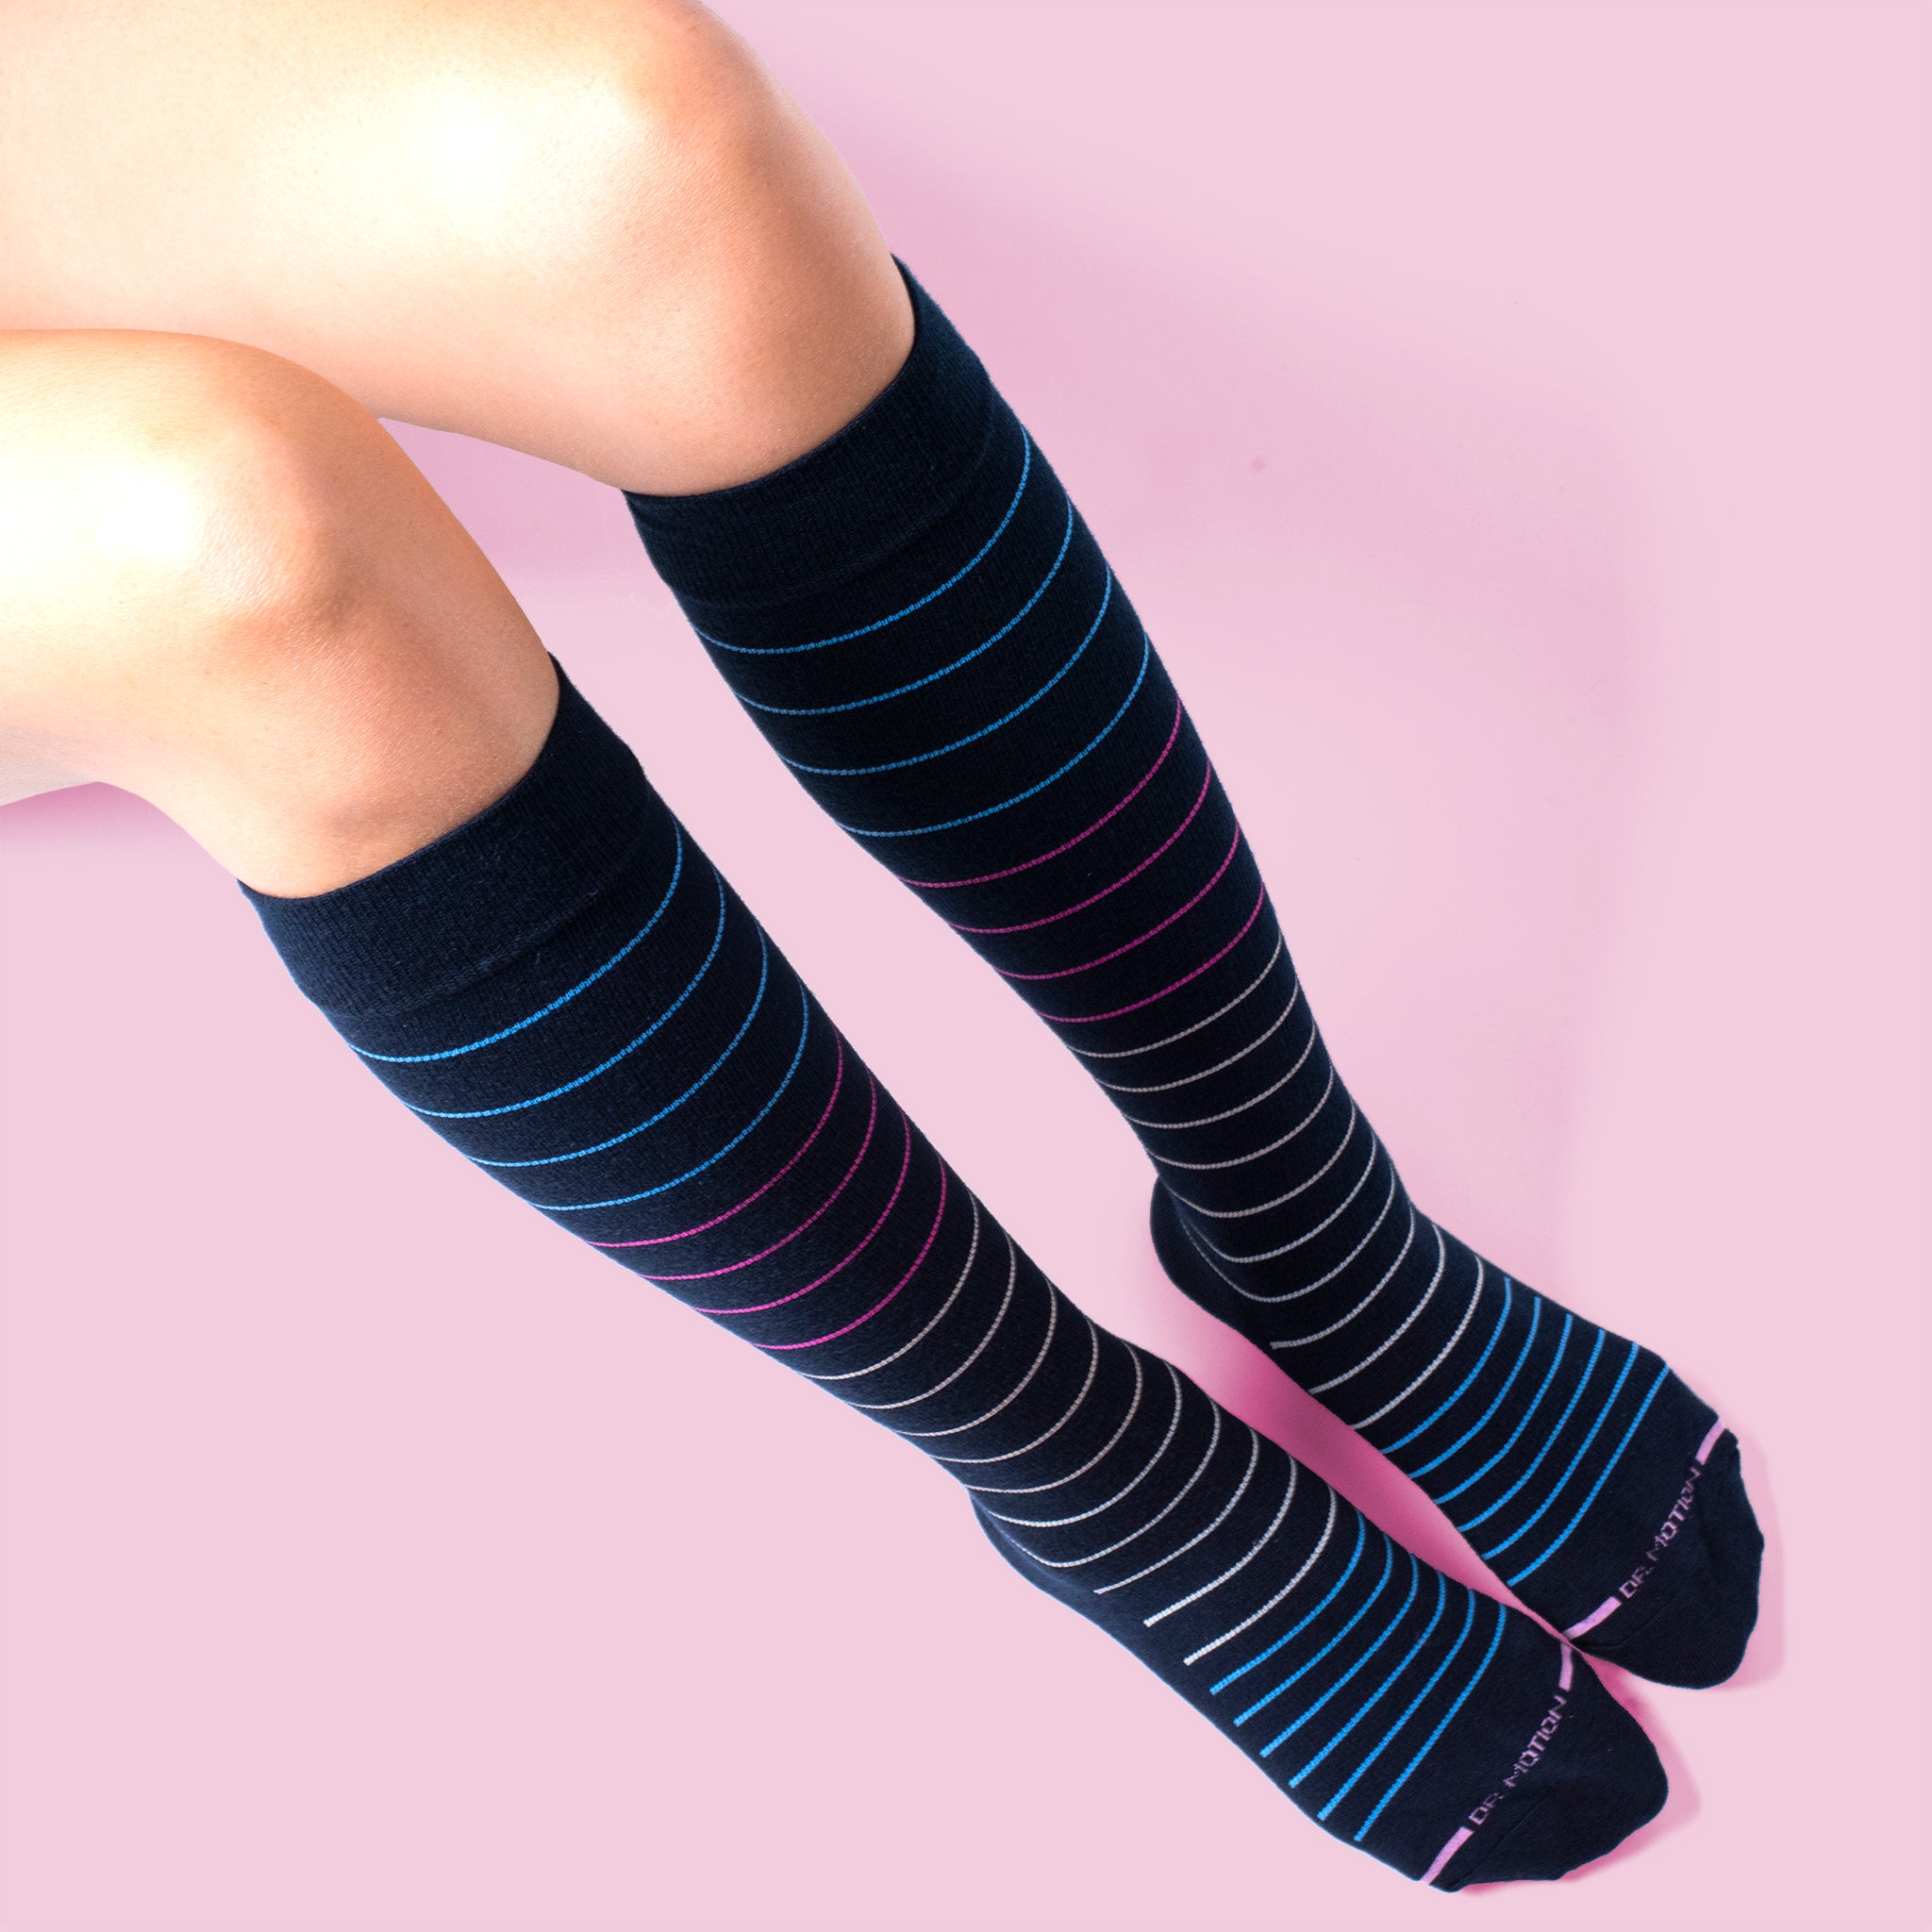 Multi-Color Pinstripe | Knee-High Compression Socks For Women